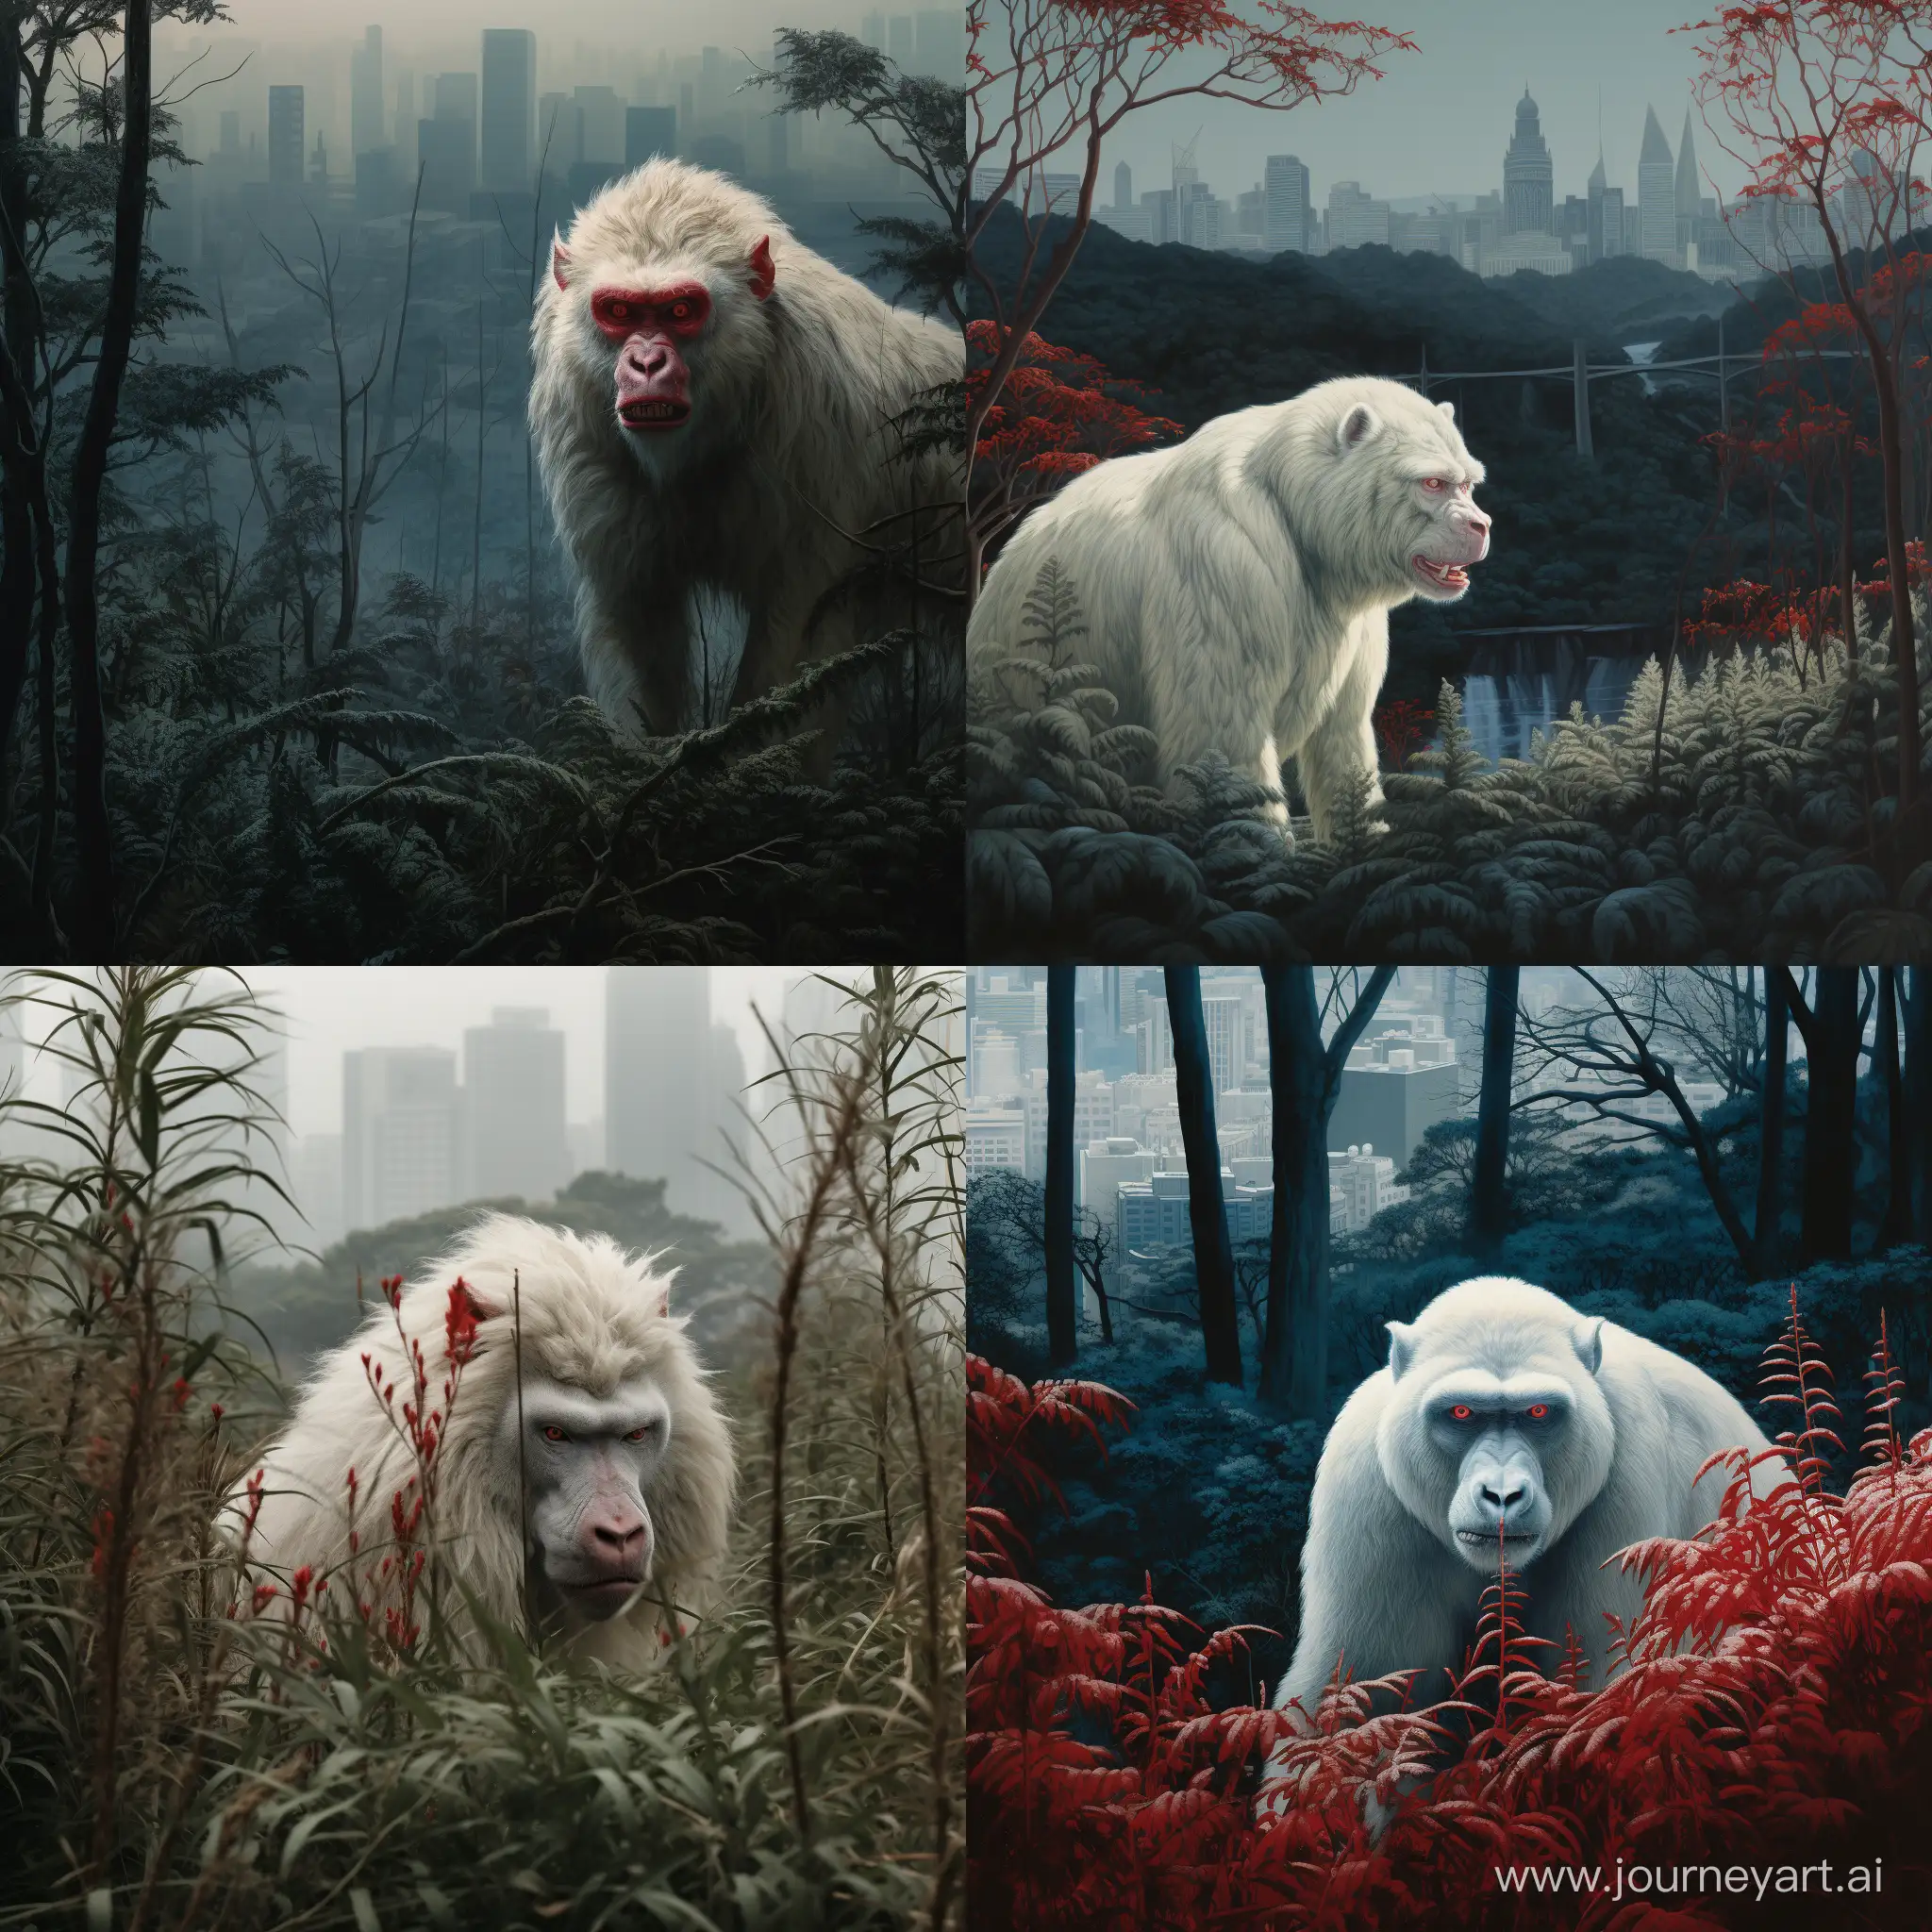 Enigmatic-White-Gorilla-with-Red-Eyes-Observing-A-Coruas-Urban-Horizon